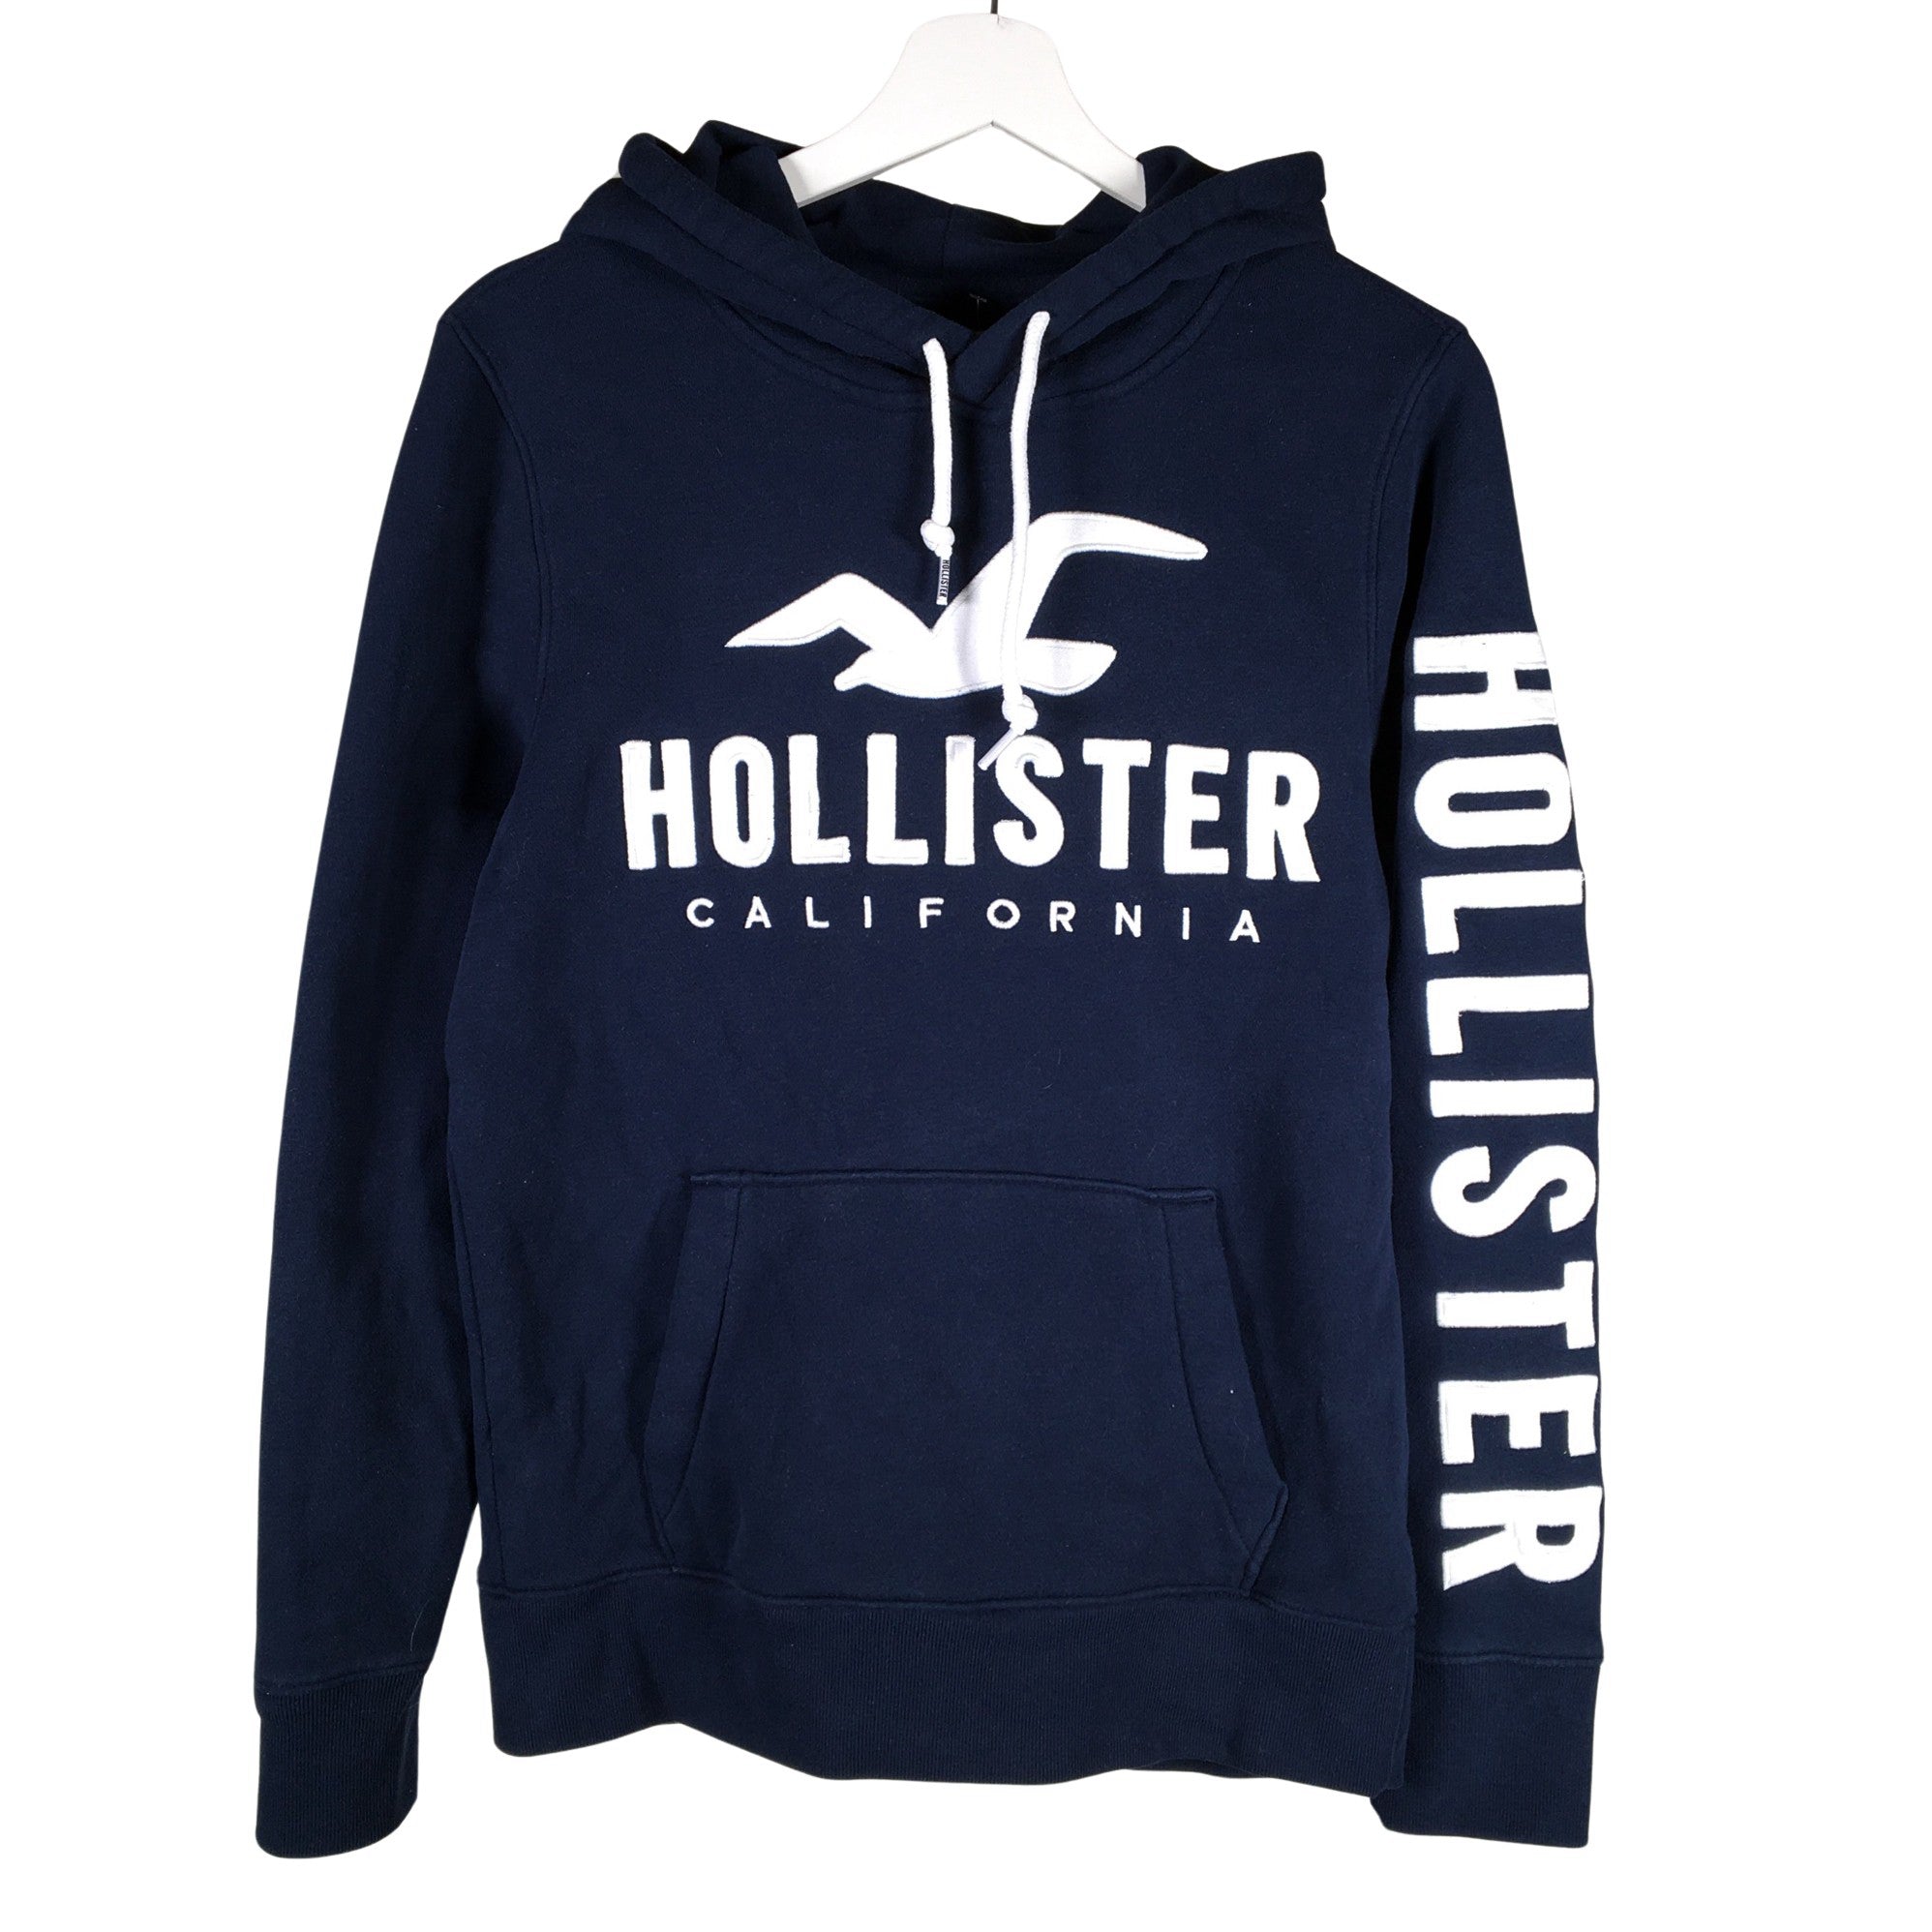 Hollister California RARE Hoodie Adult Black XL Unisex 